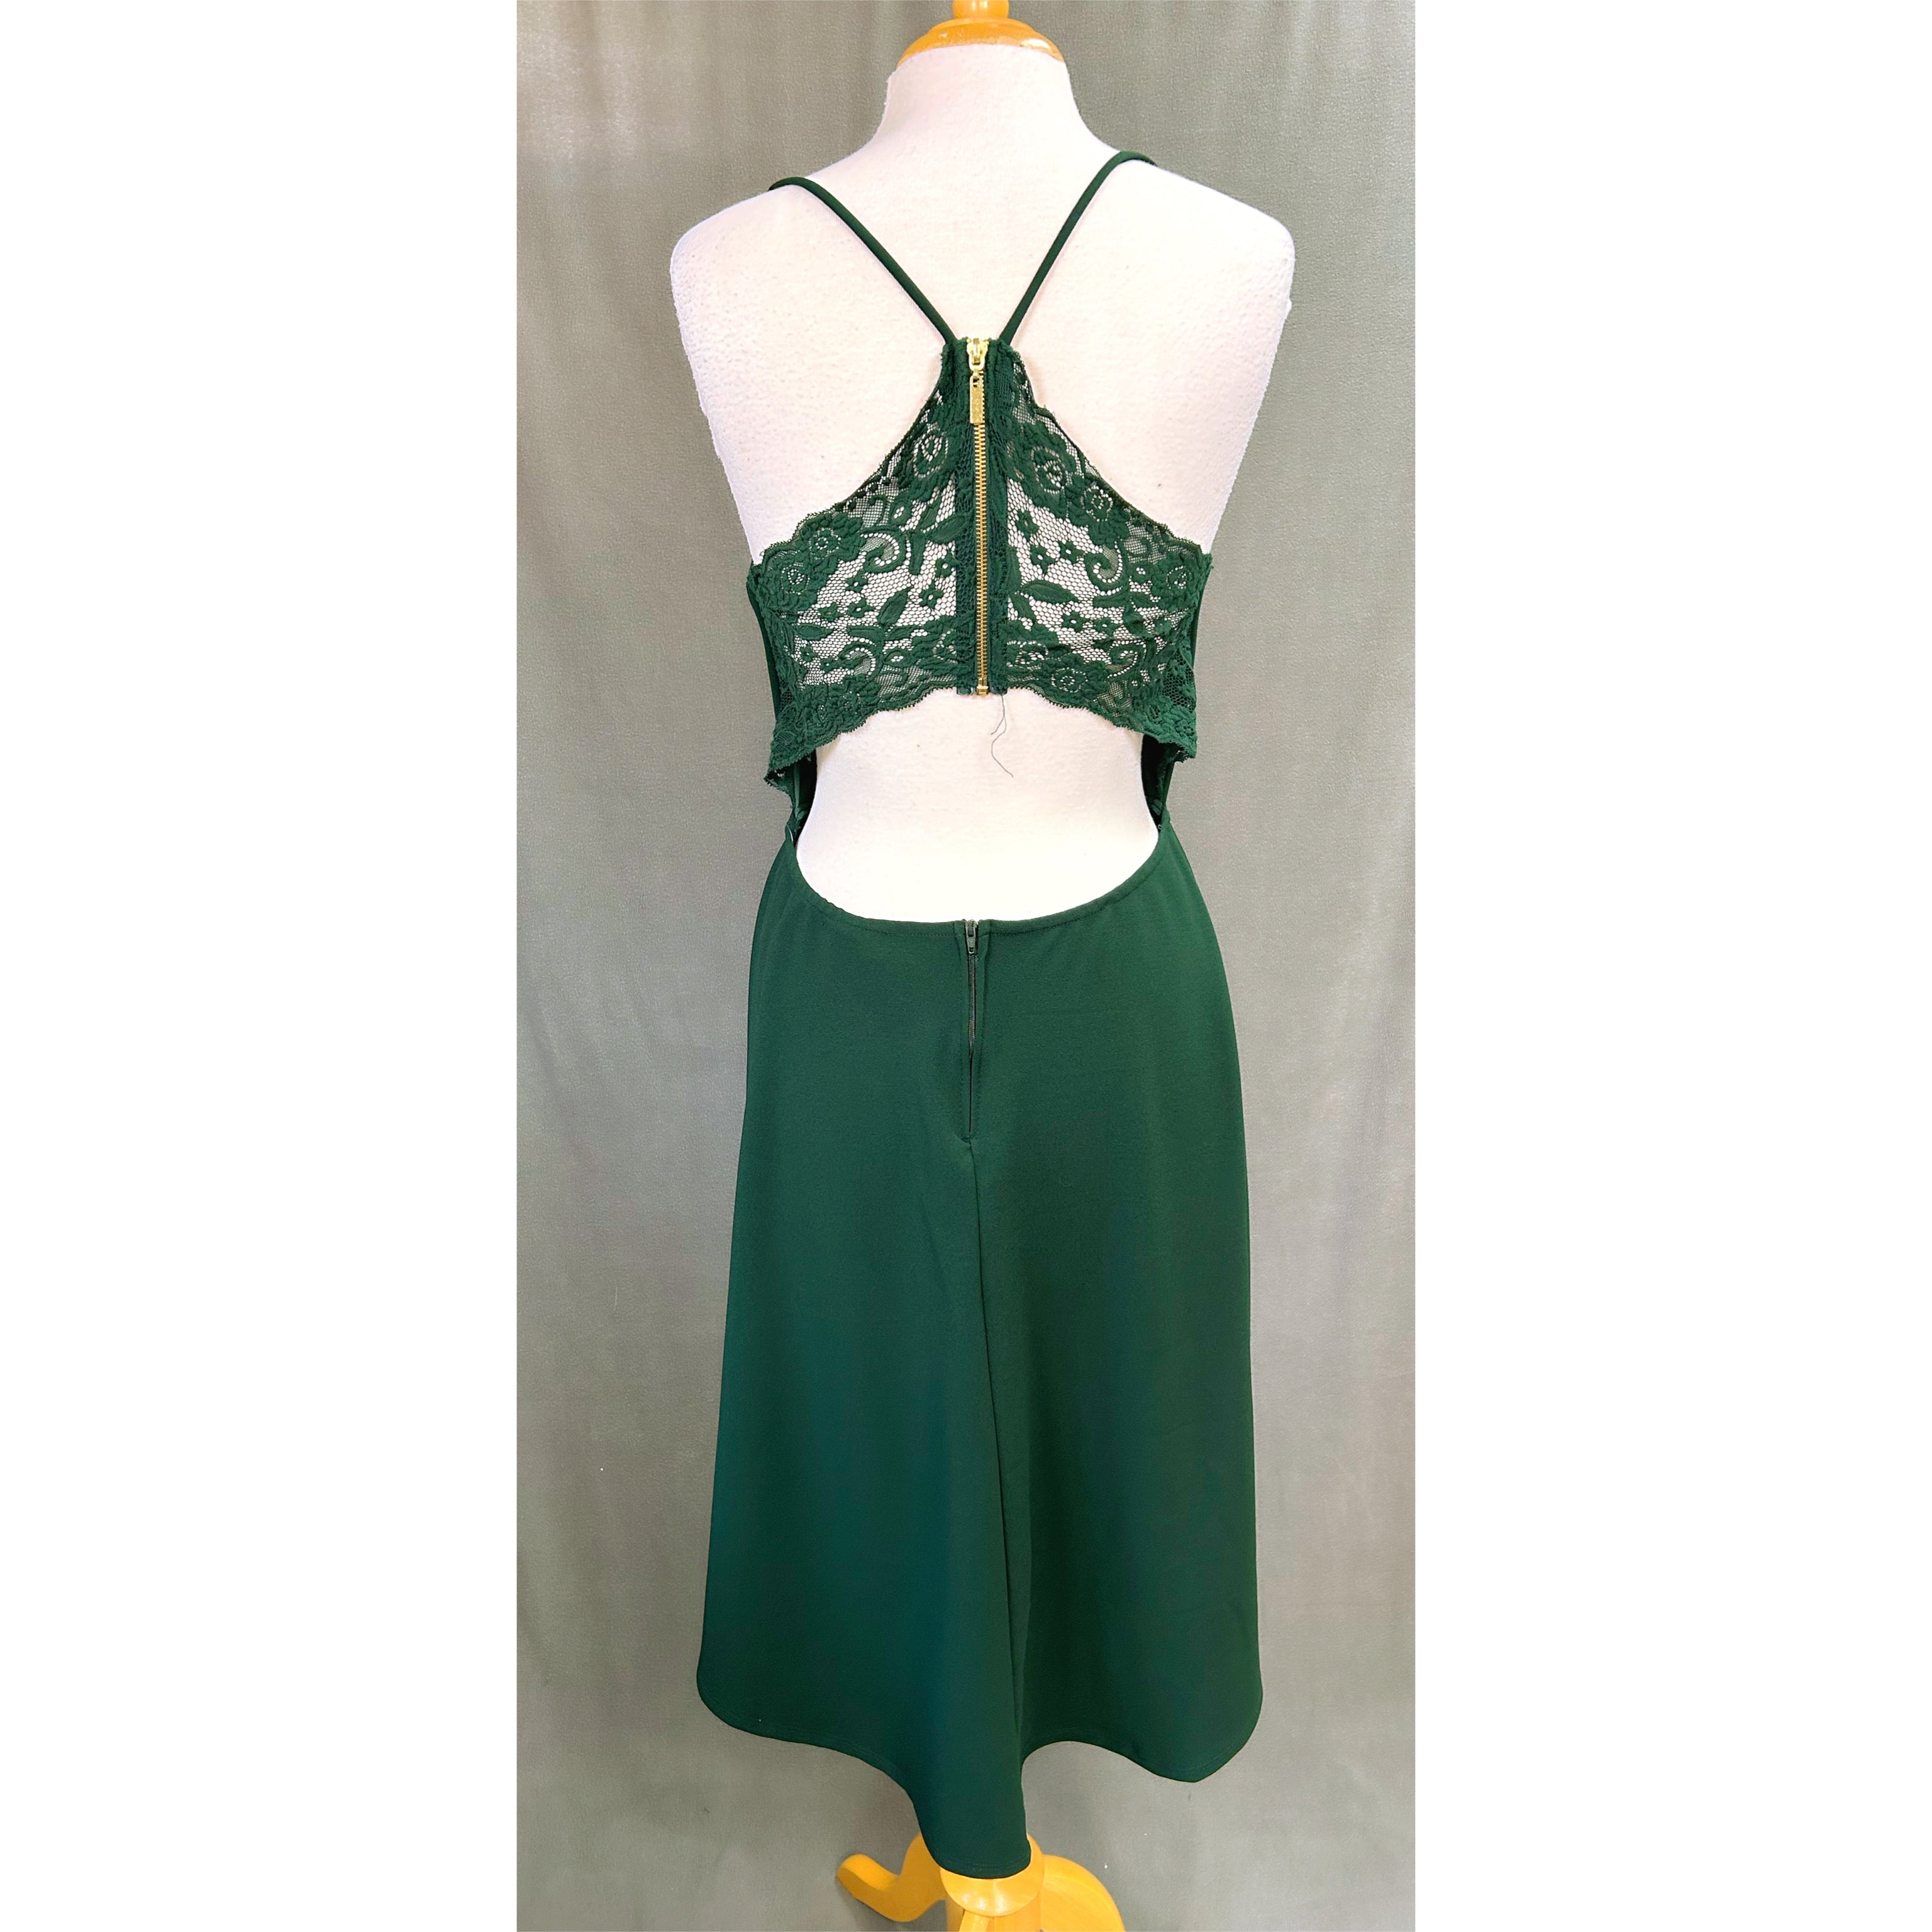 B. Darlin evergreen dress, size 17/18